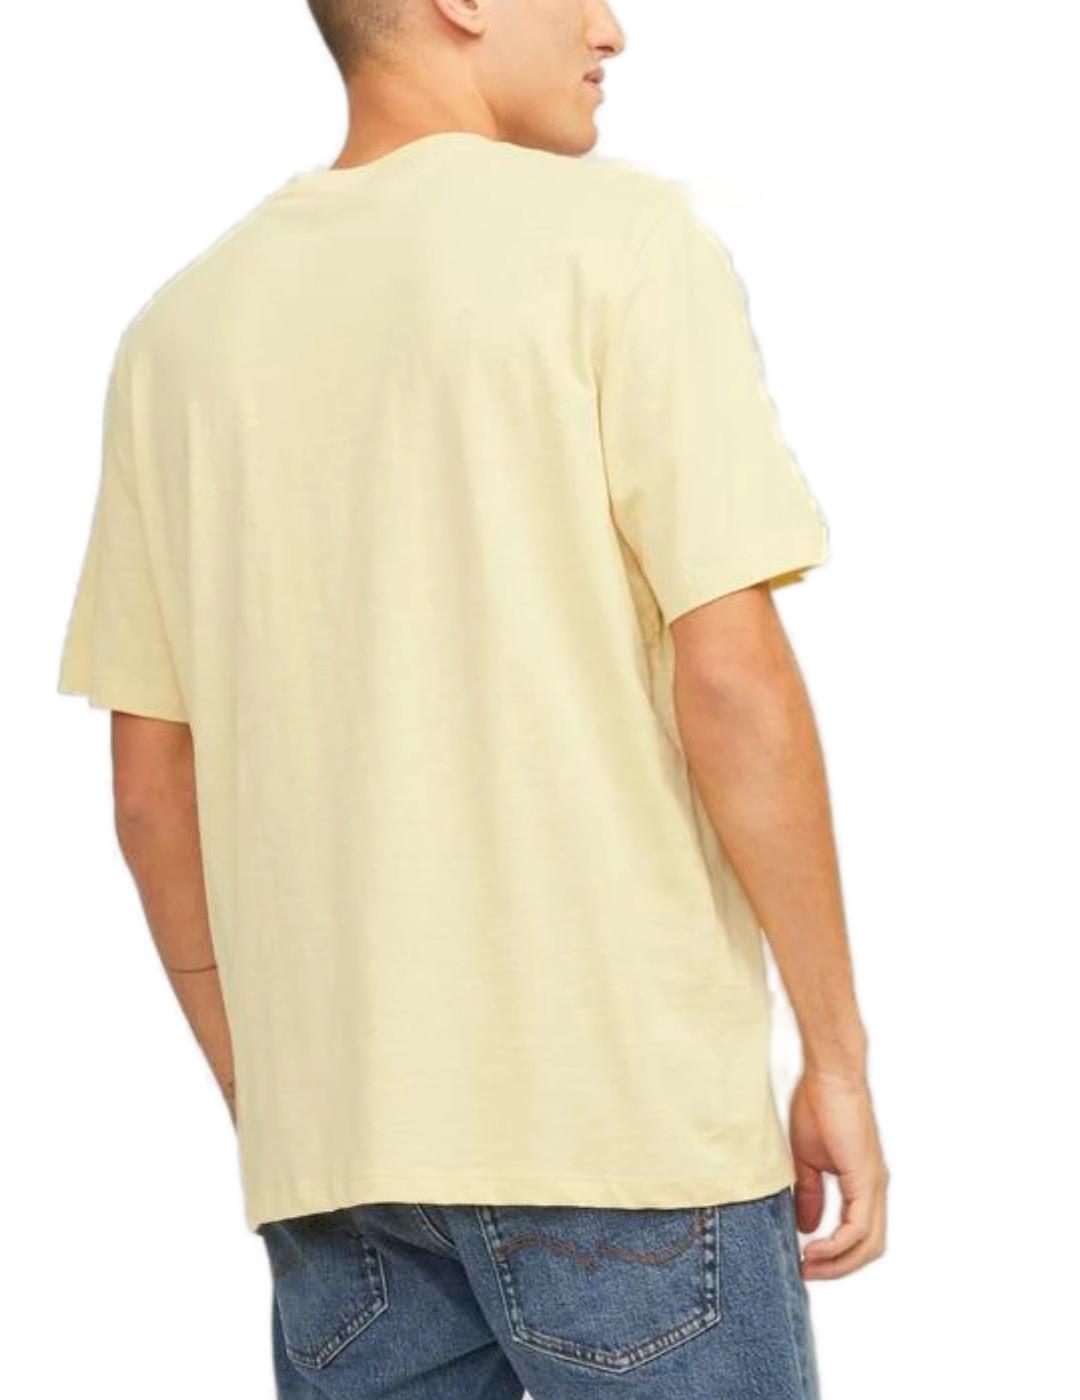 Camiseta Jack&Jones Lafayette amarilla manga corta hombre